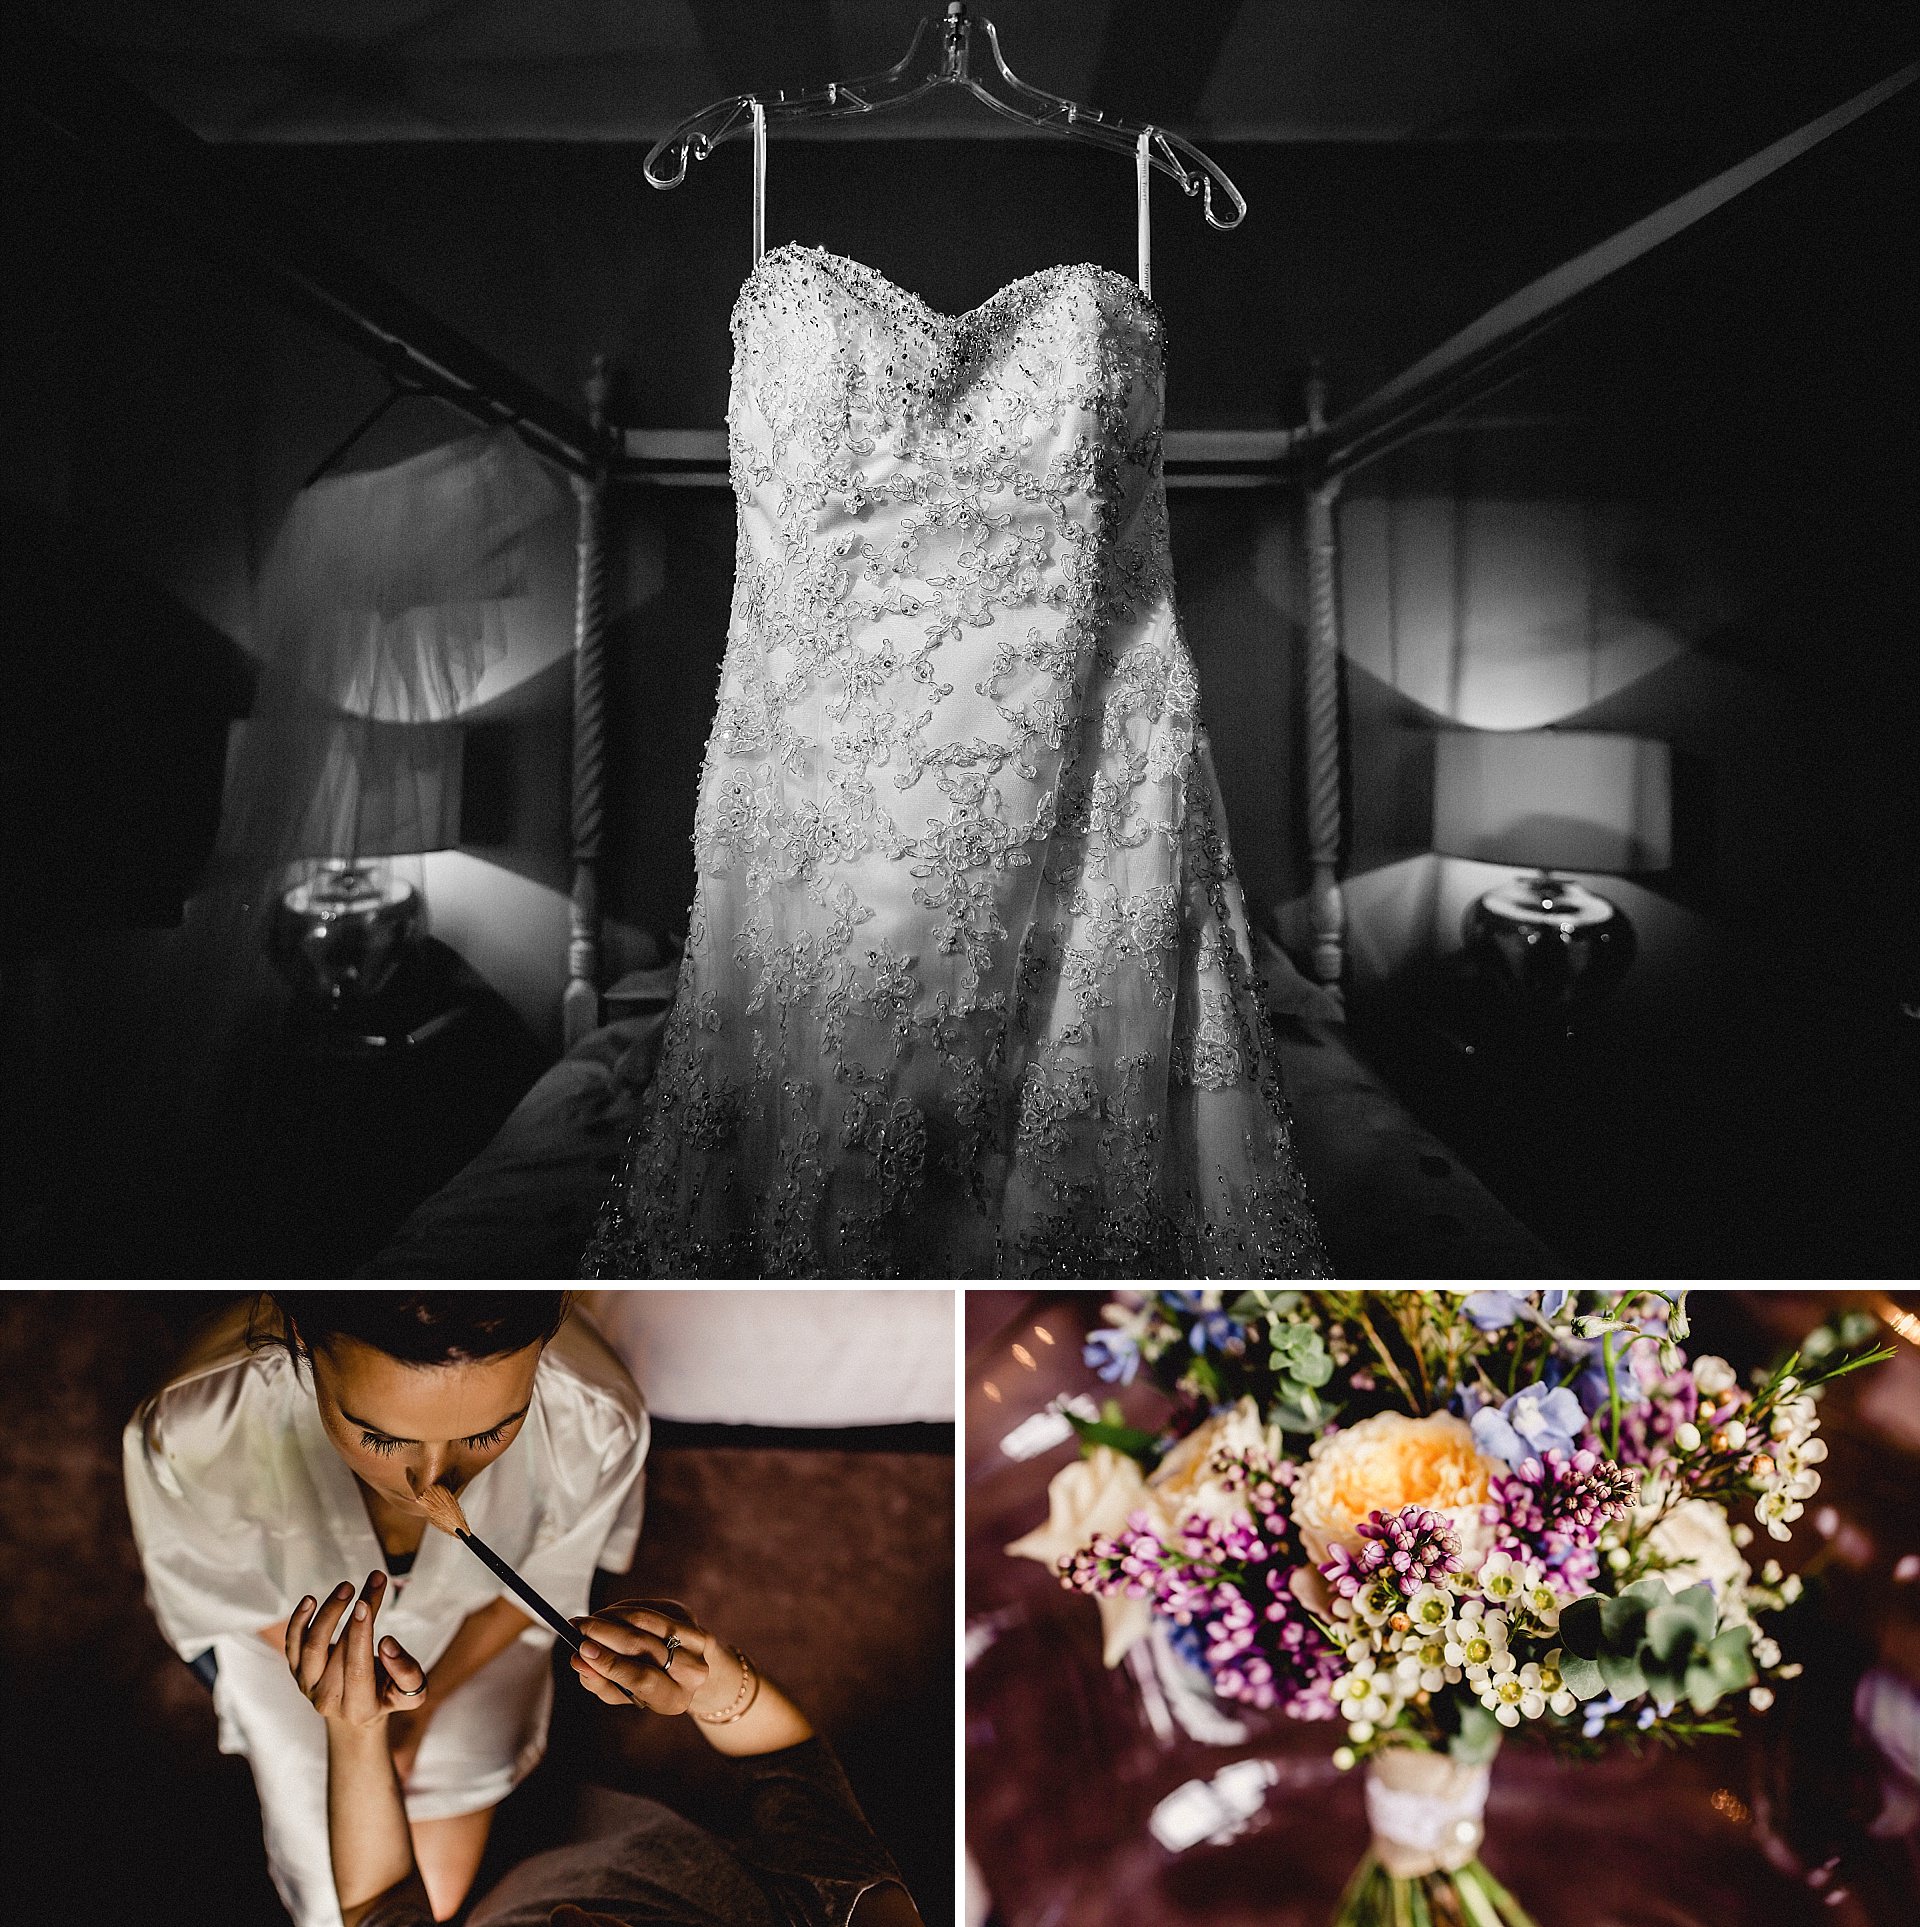 photos, wedding dress, and flowers, boquets